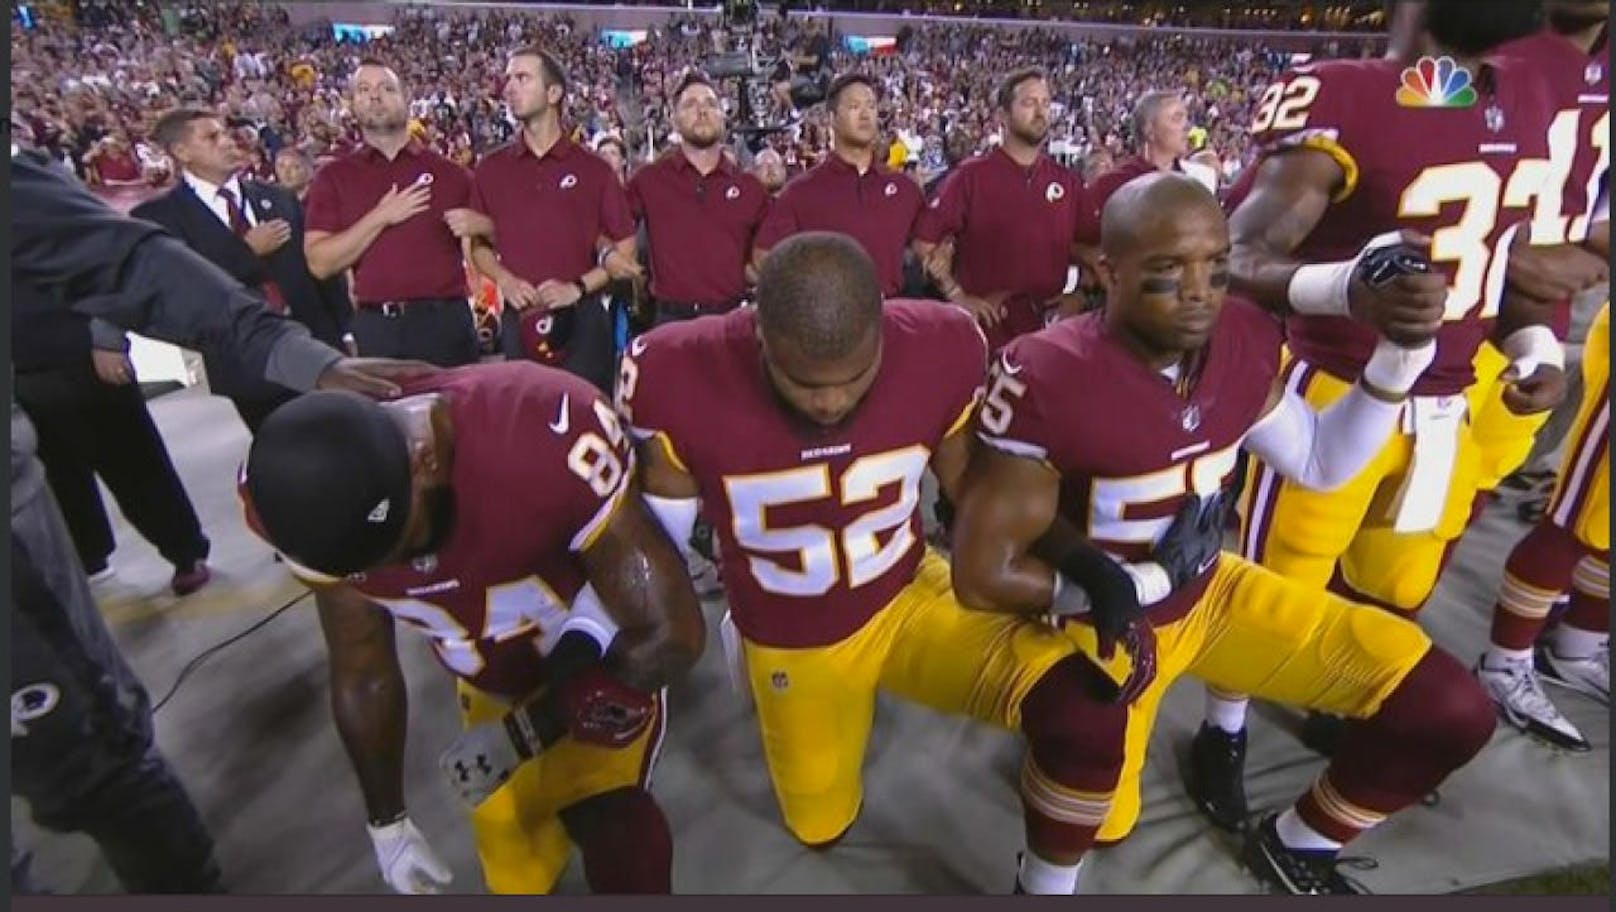 NFL-Spieler knieten aus Protest gegen Donald Trump nieder. Credit: Twitter Screenshot